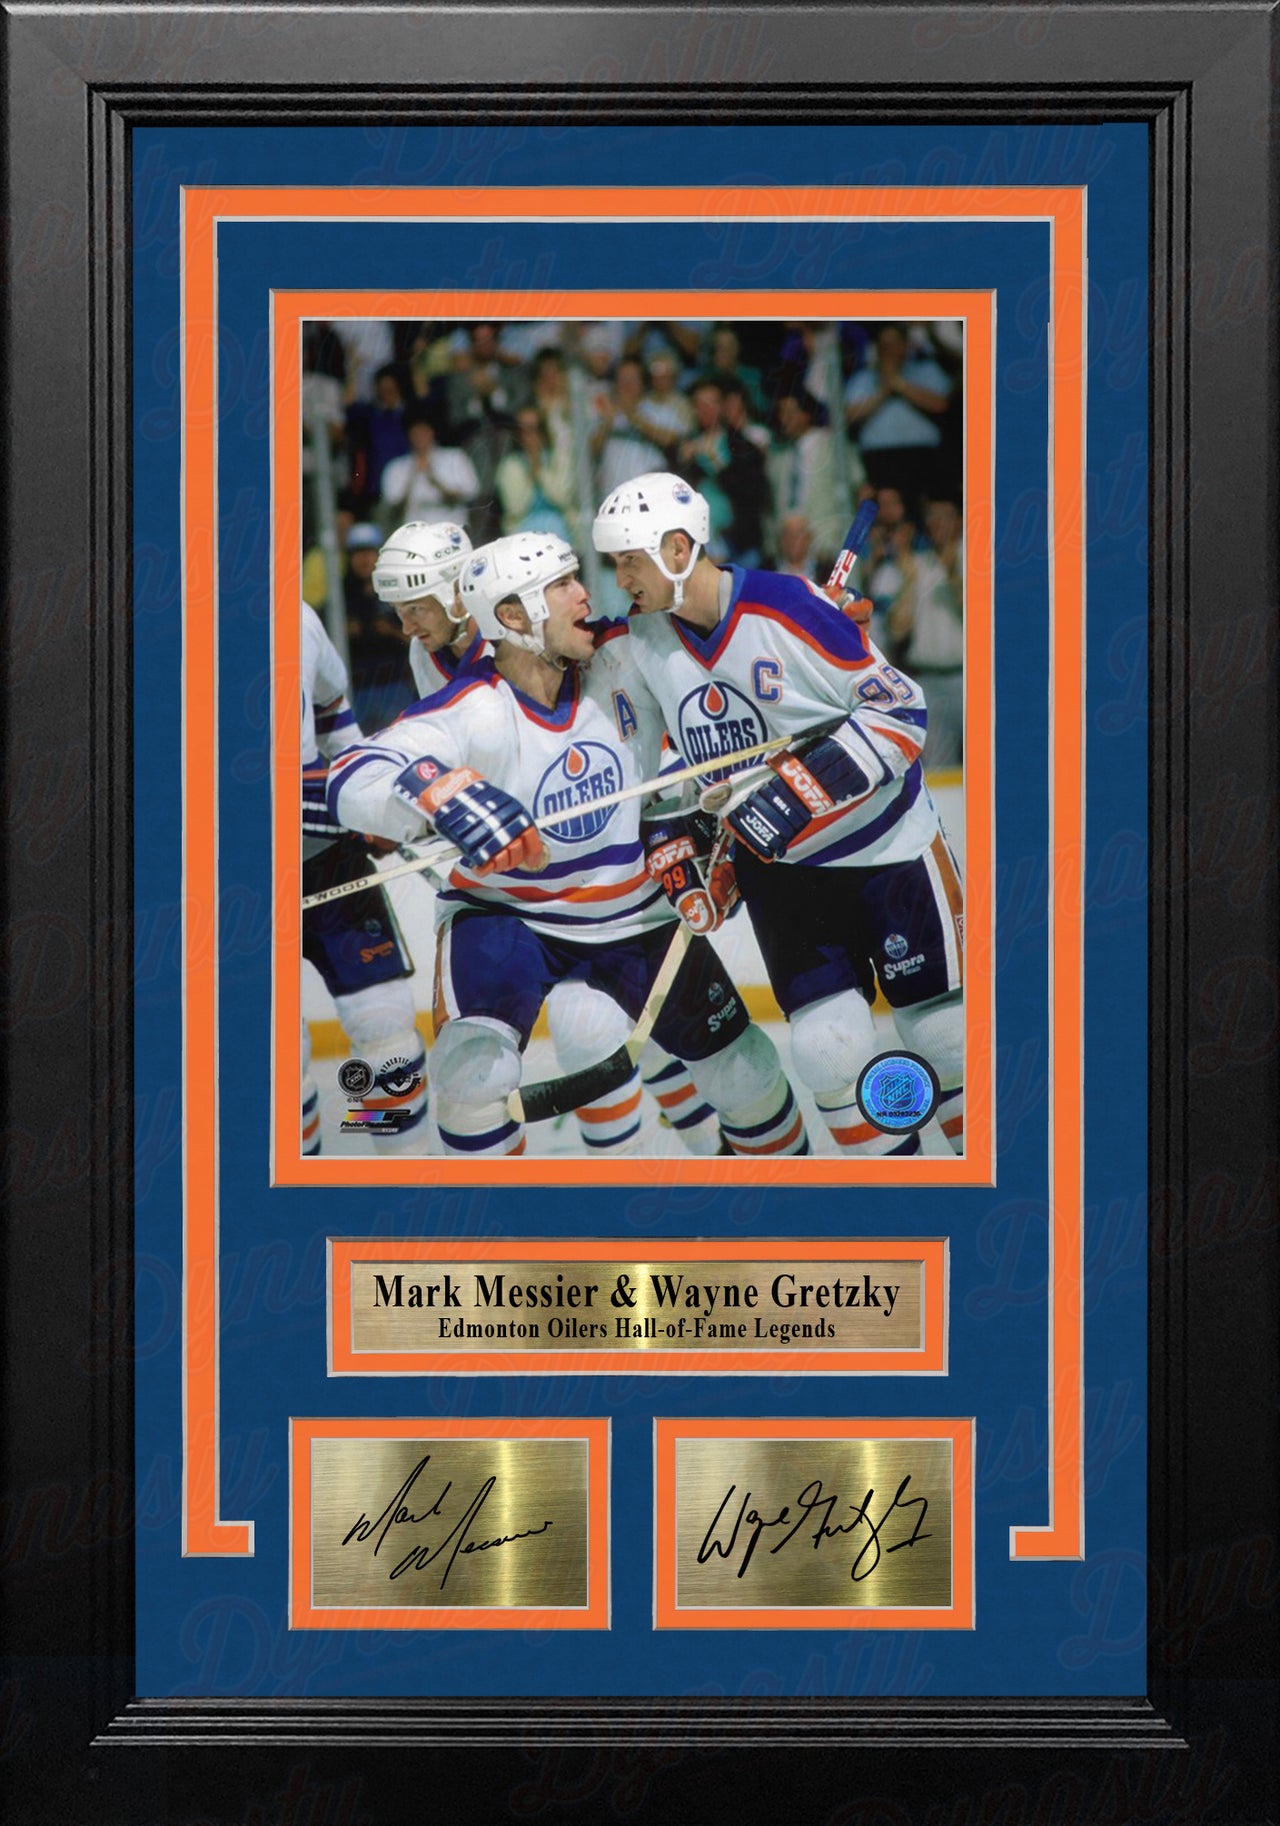 Mark Messier & Wayne Gretzky Edmonton Oilers 8" x 10" Framed Hockey Photo with Engraved Autographs